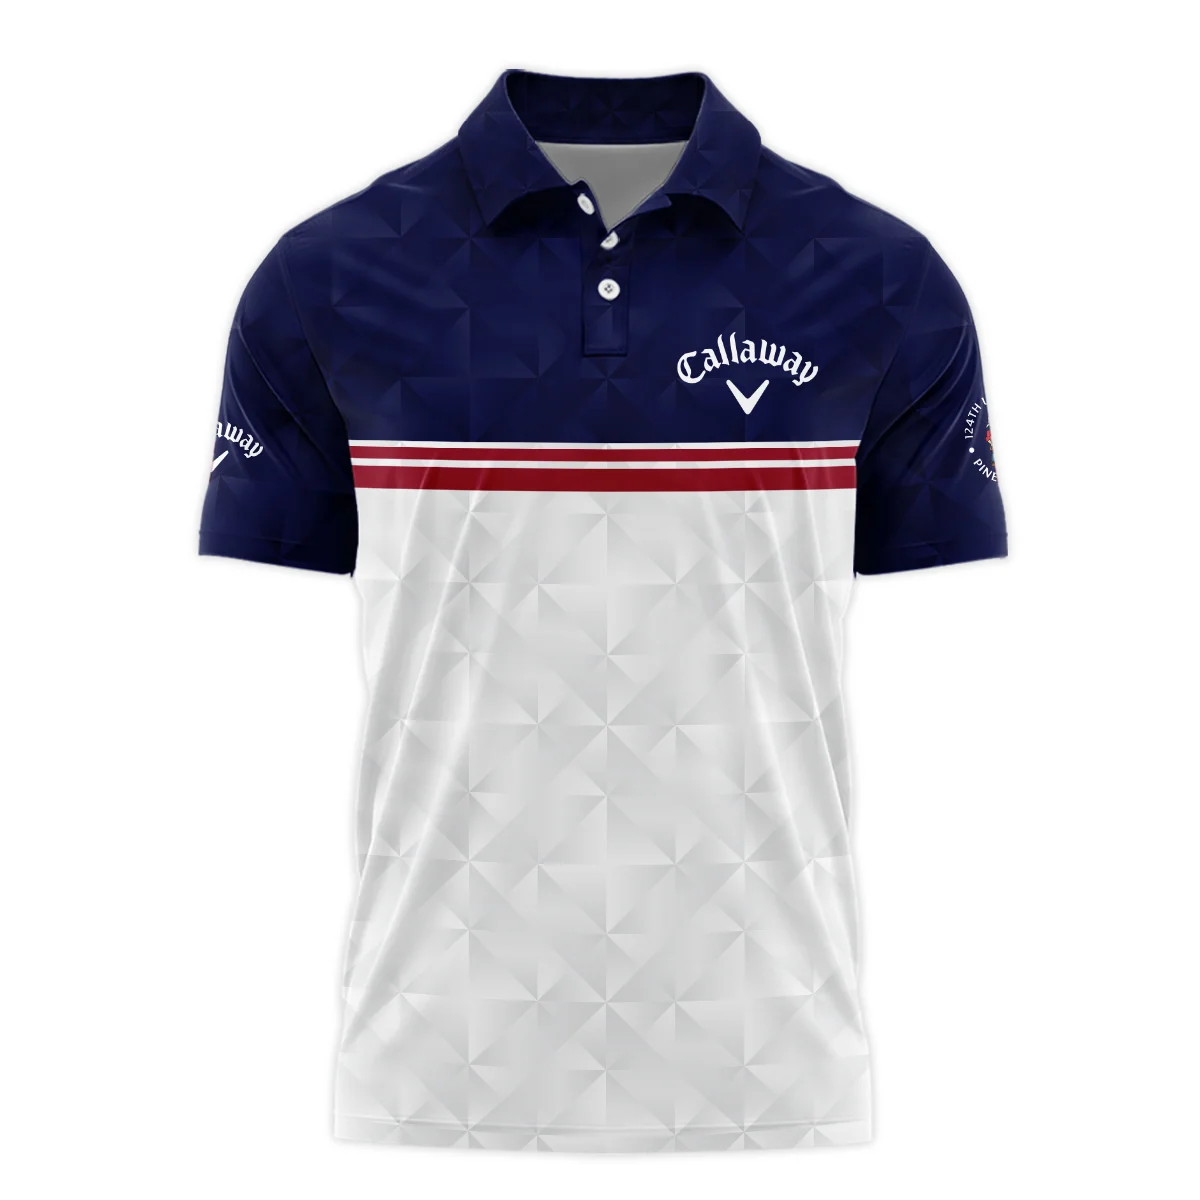 Golf Sport 124th U.S. Open Pinehurst Callaway Unisex Sweatshirt Dark Blue White Abstract Geometric Triangles All Over Print Sweatshirt